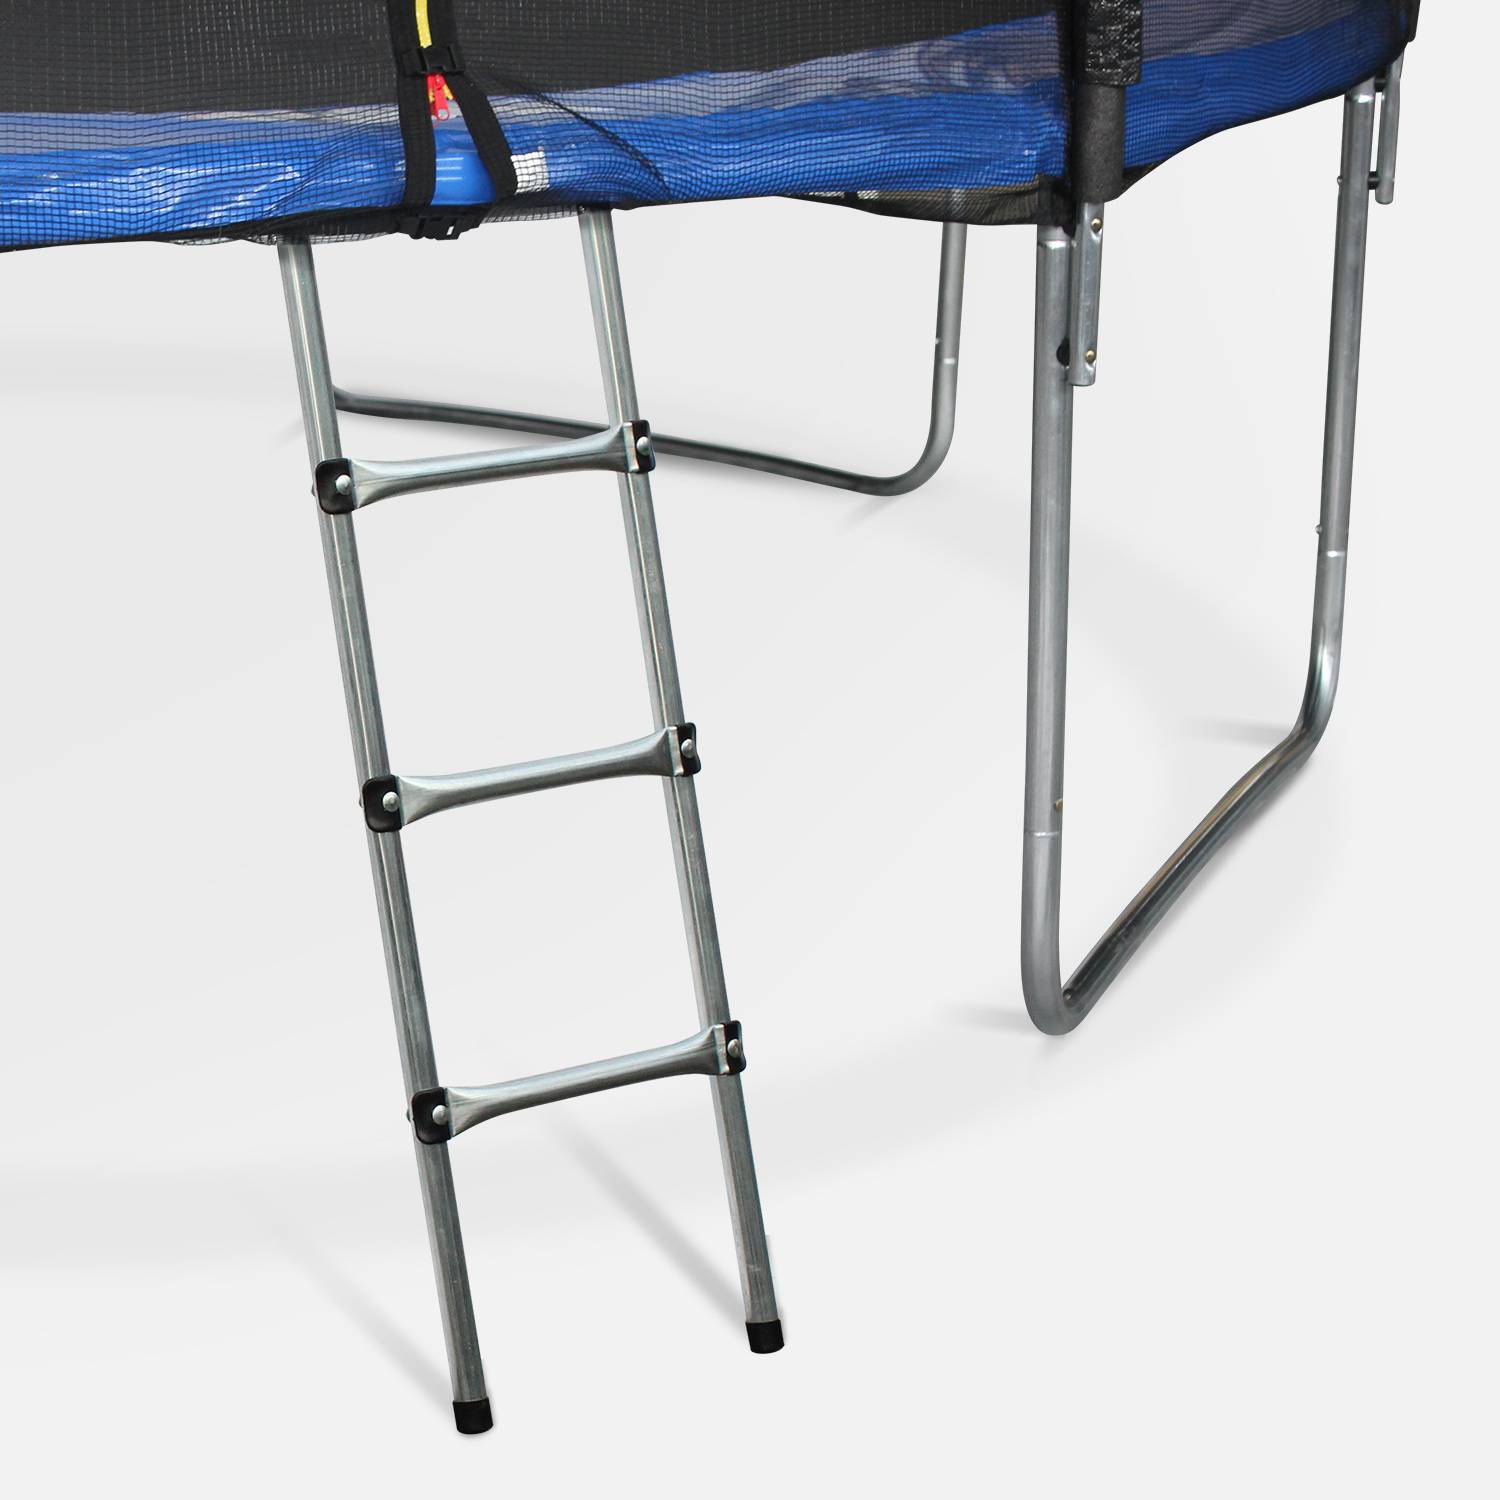 Trampoline Accessories Pack - Ø490 cm - Ladder, Rain Cover, Shoe Net, Anchor Kit Photo2